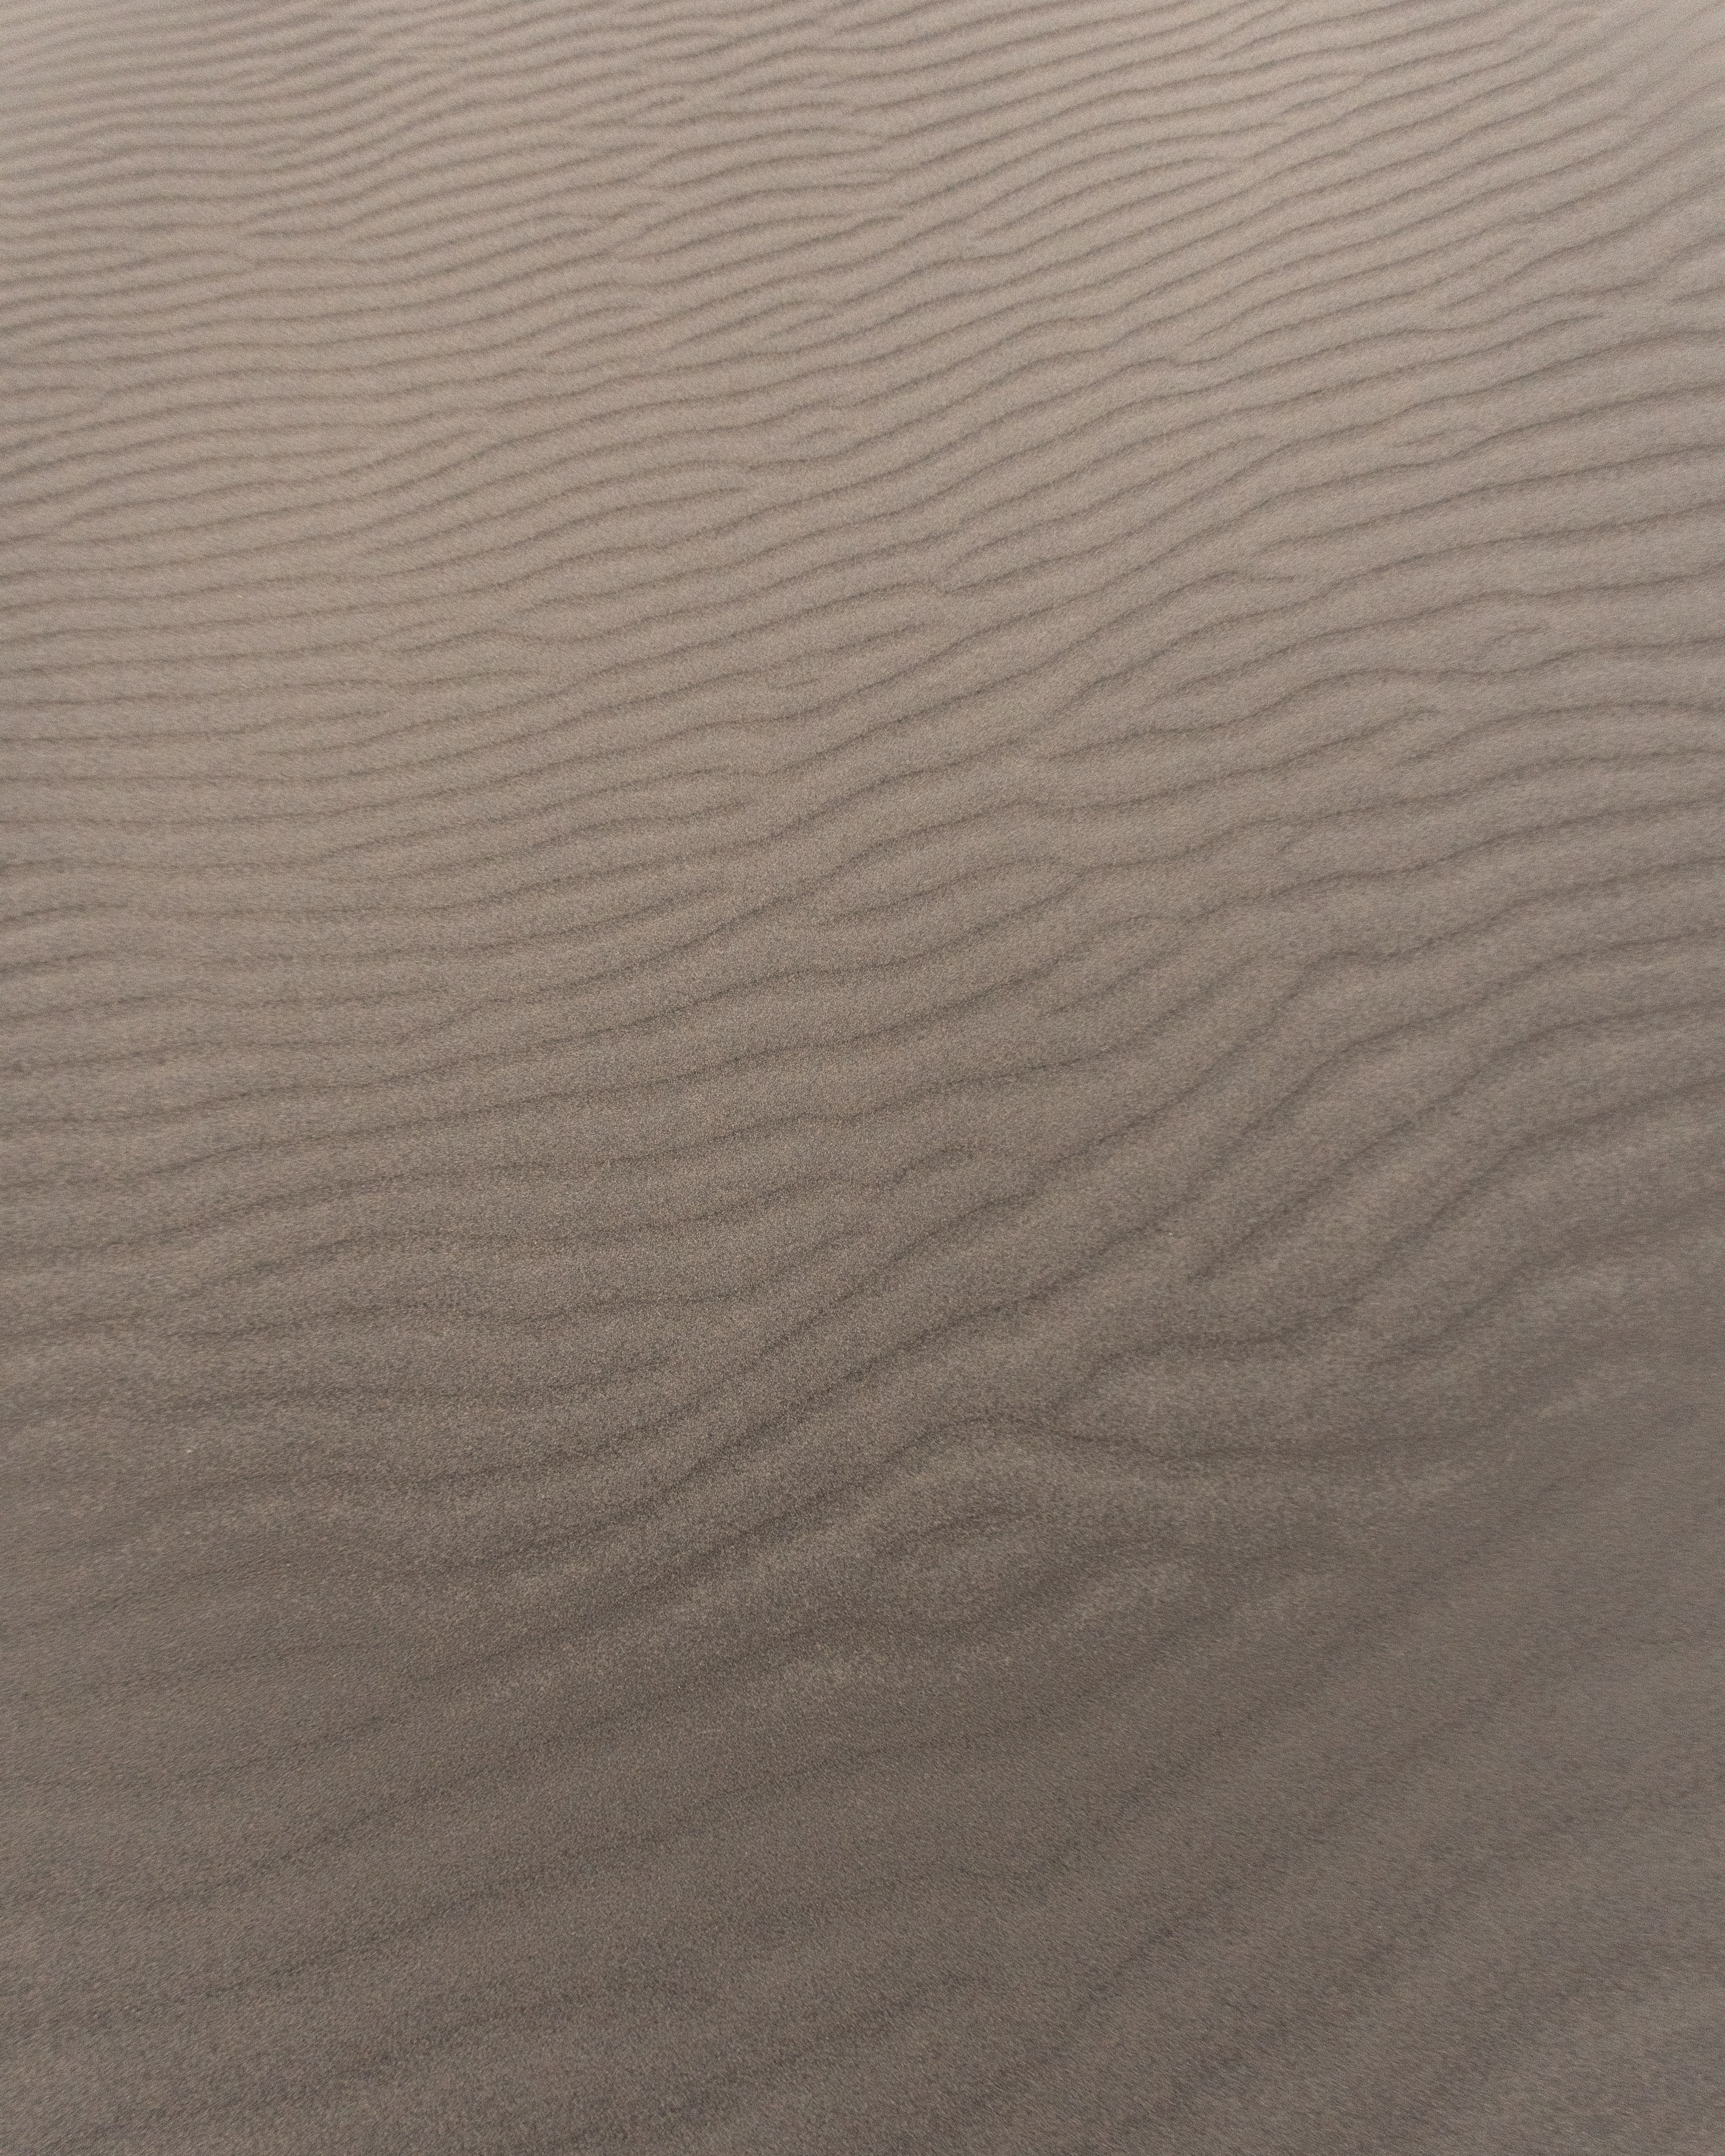 1920 x 1080 picture waves, sand, desert, texture, textures, stripes, streaks